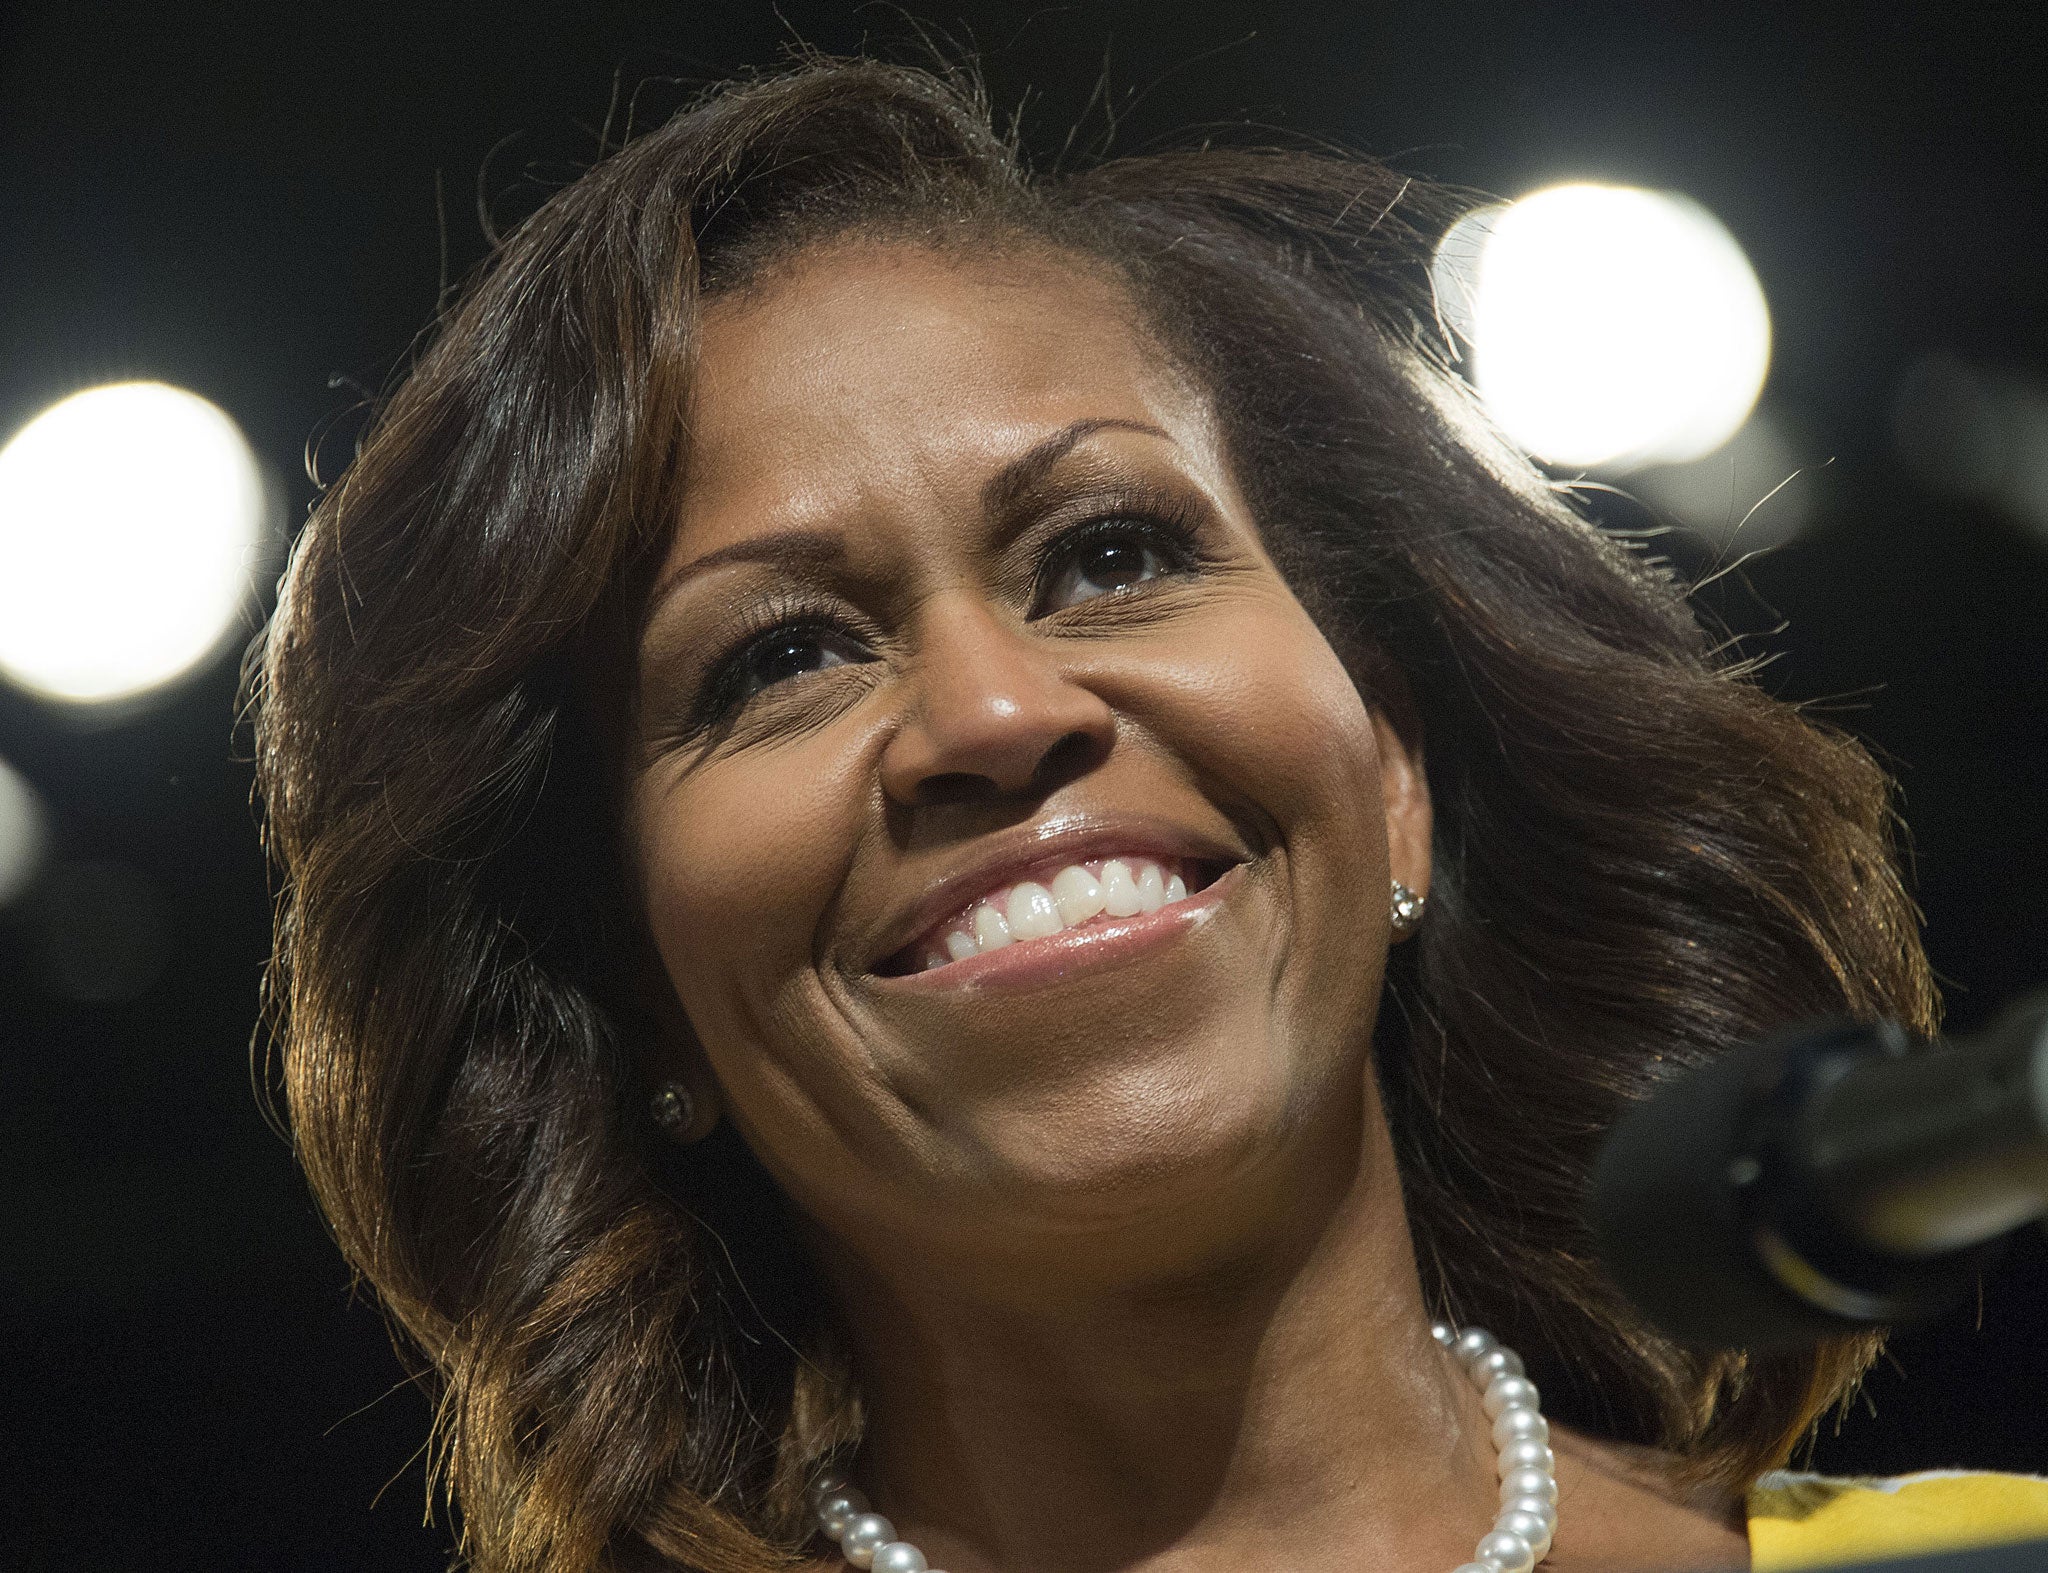 Michelle Obamais launching a hip-hop album to improve America's health